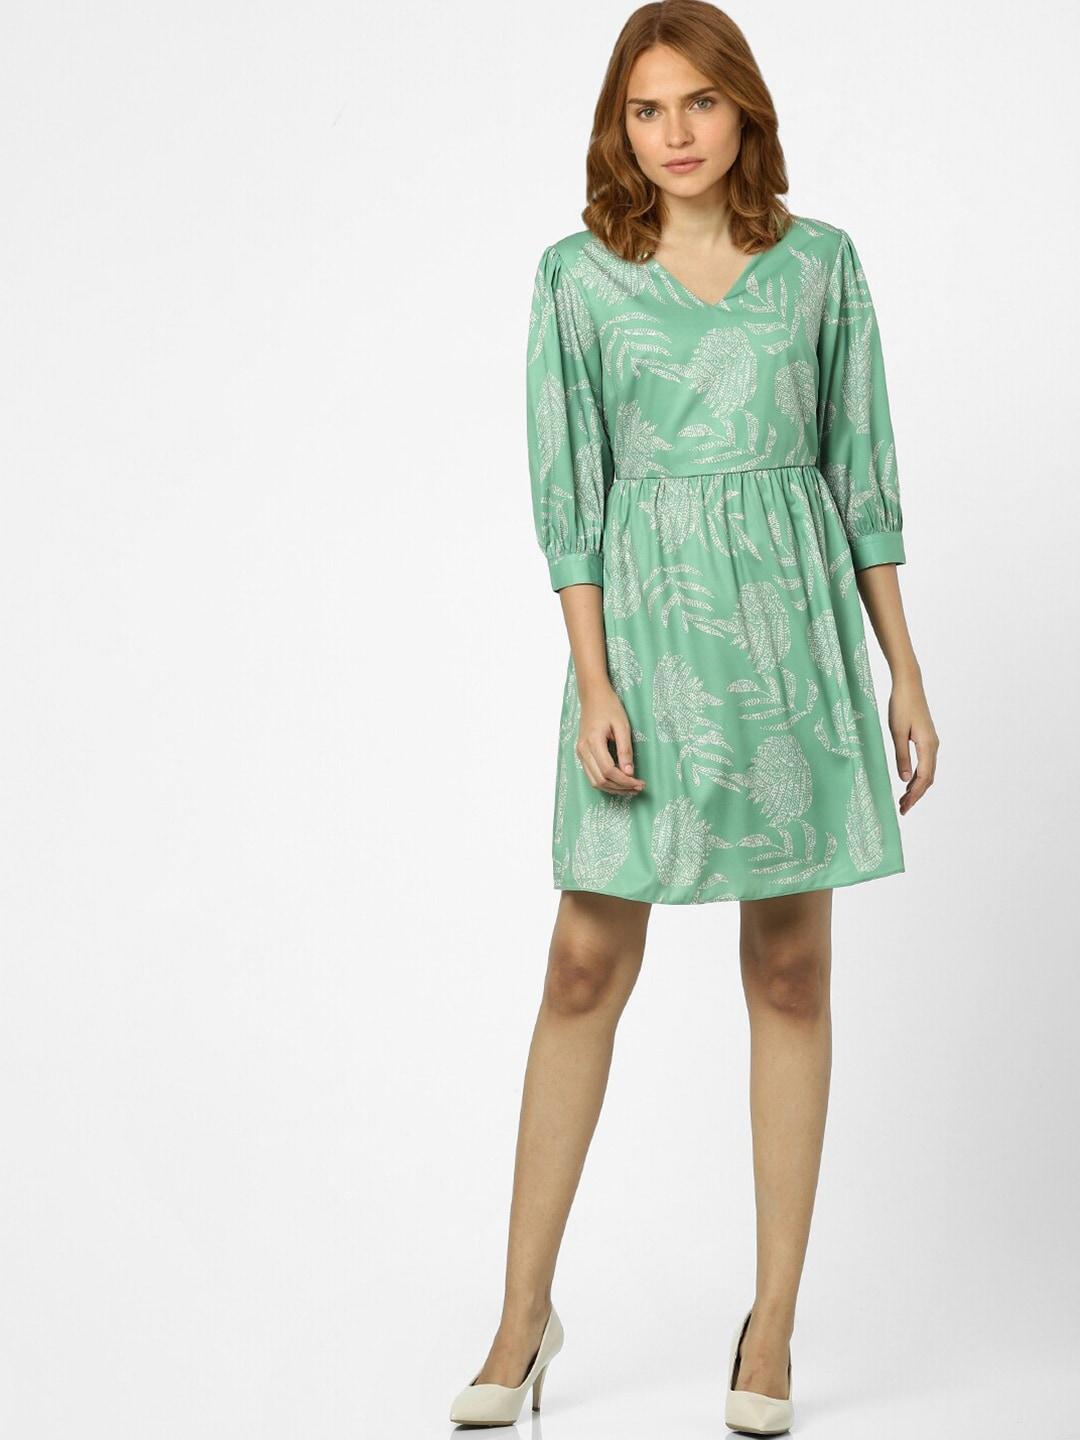 vero-moda-green-tropical-print-fit-&-flare-dress